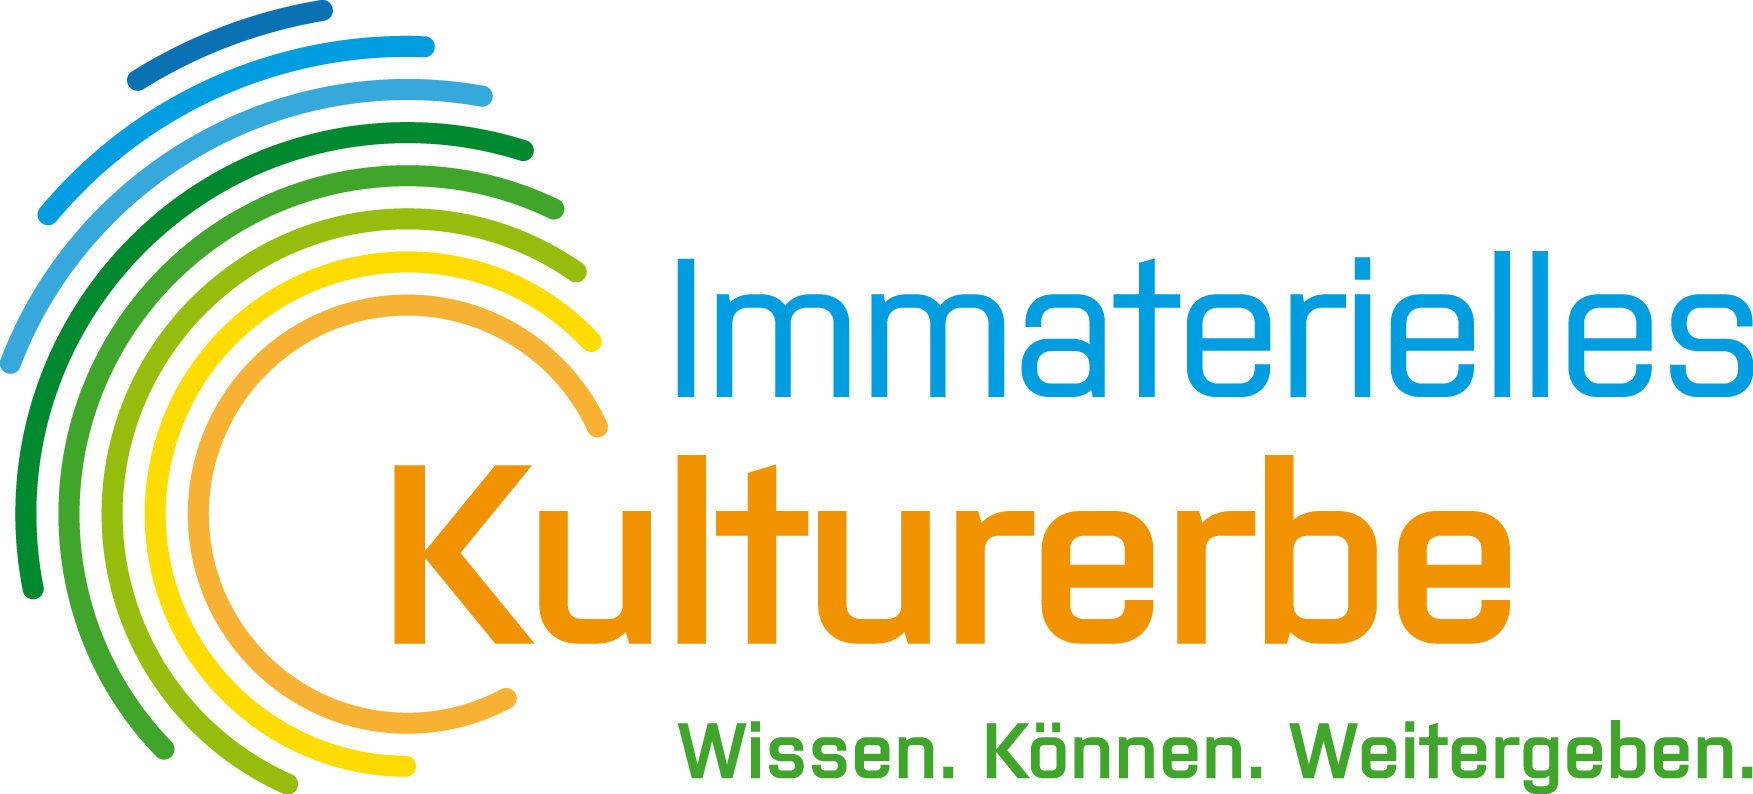 Logo Immaterielles Kulturerbe 1711